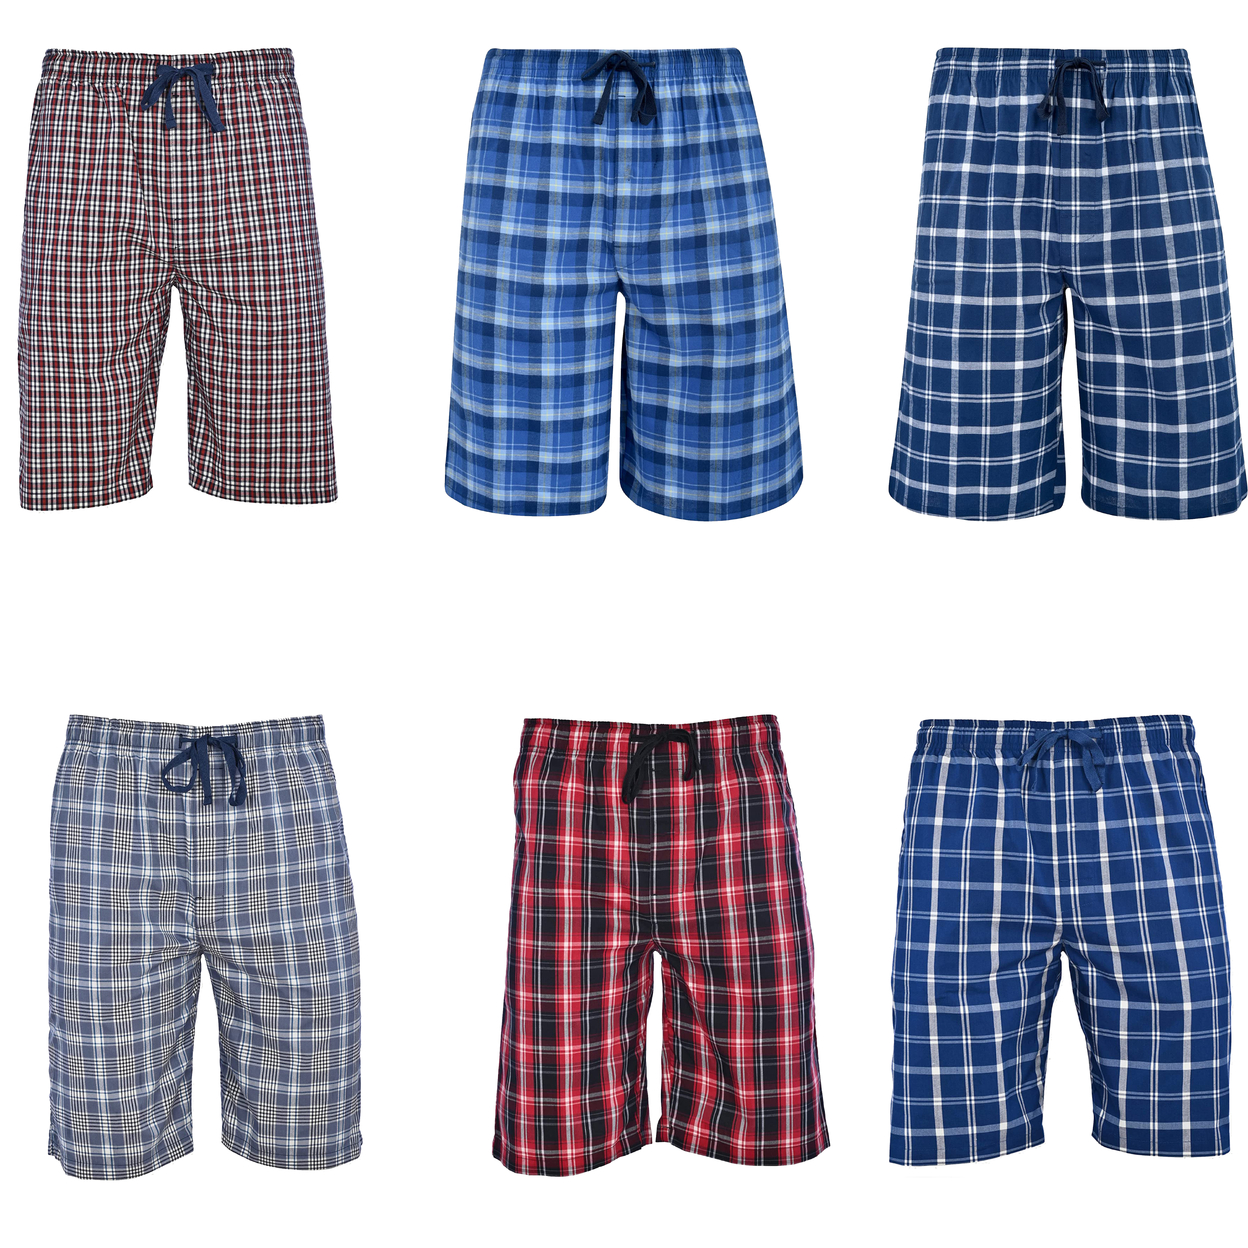 Men's Ultra-Soft Plaid Lounge Pajama Sleep Wear Shorts - Tan, X-large